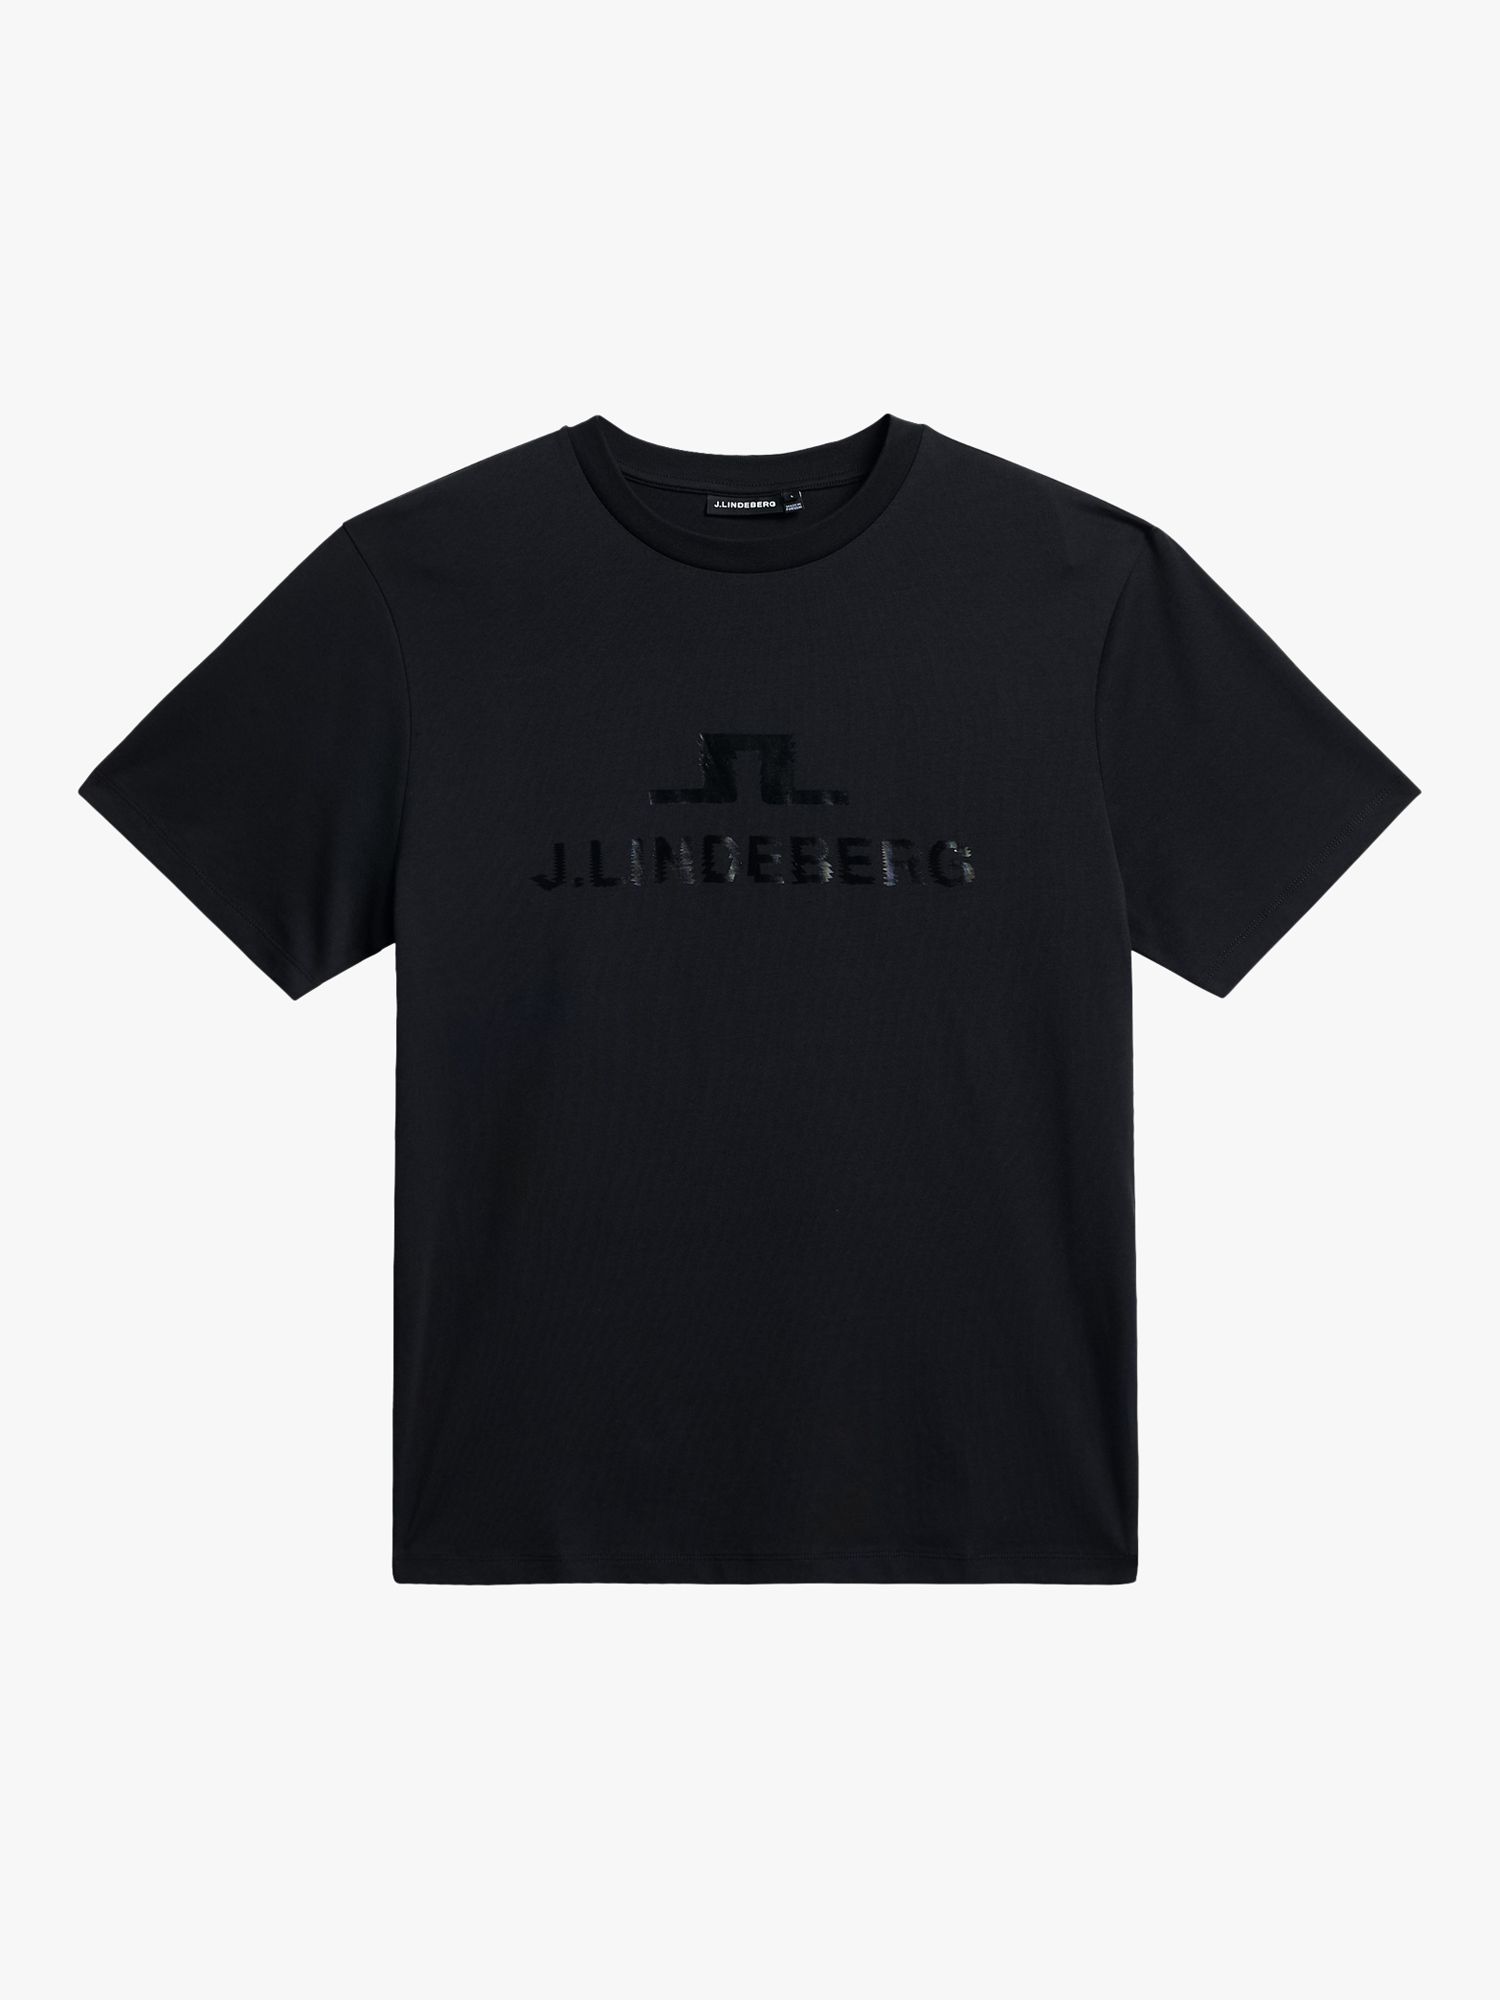 J.Lindeberg Parcy Logo T-Shirt, Black, S